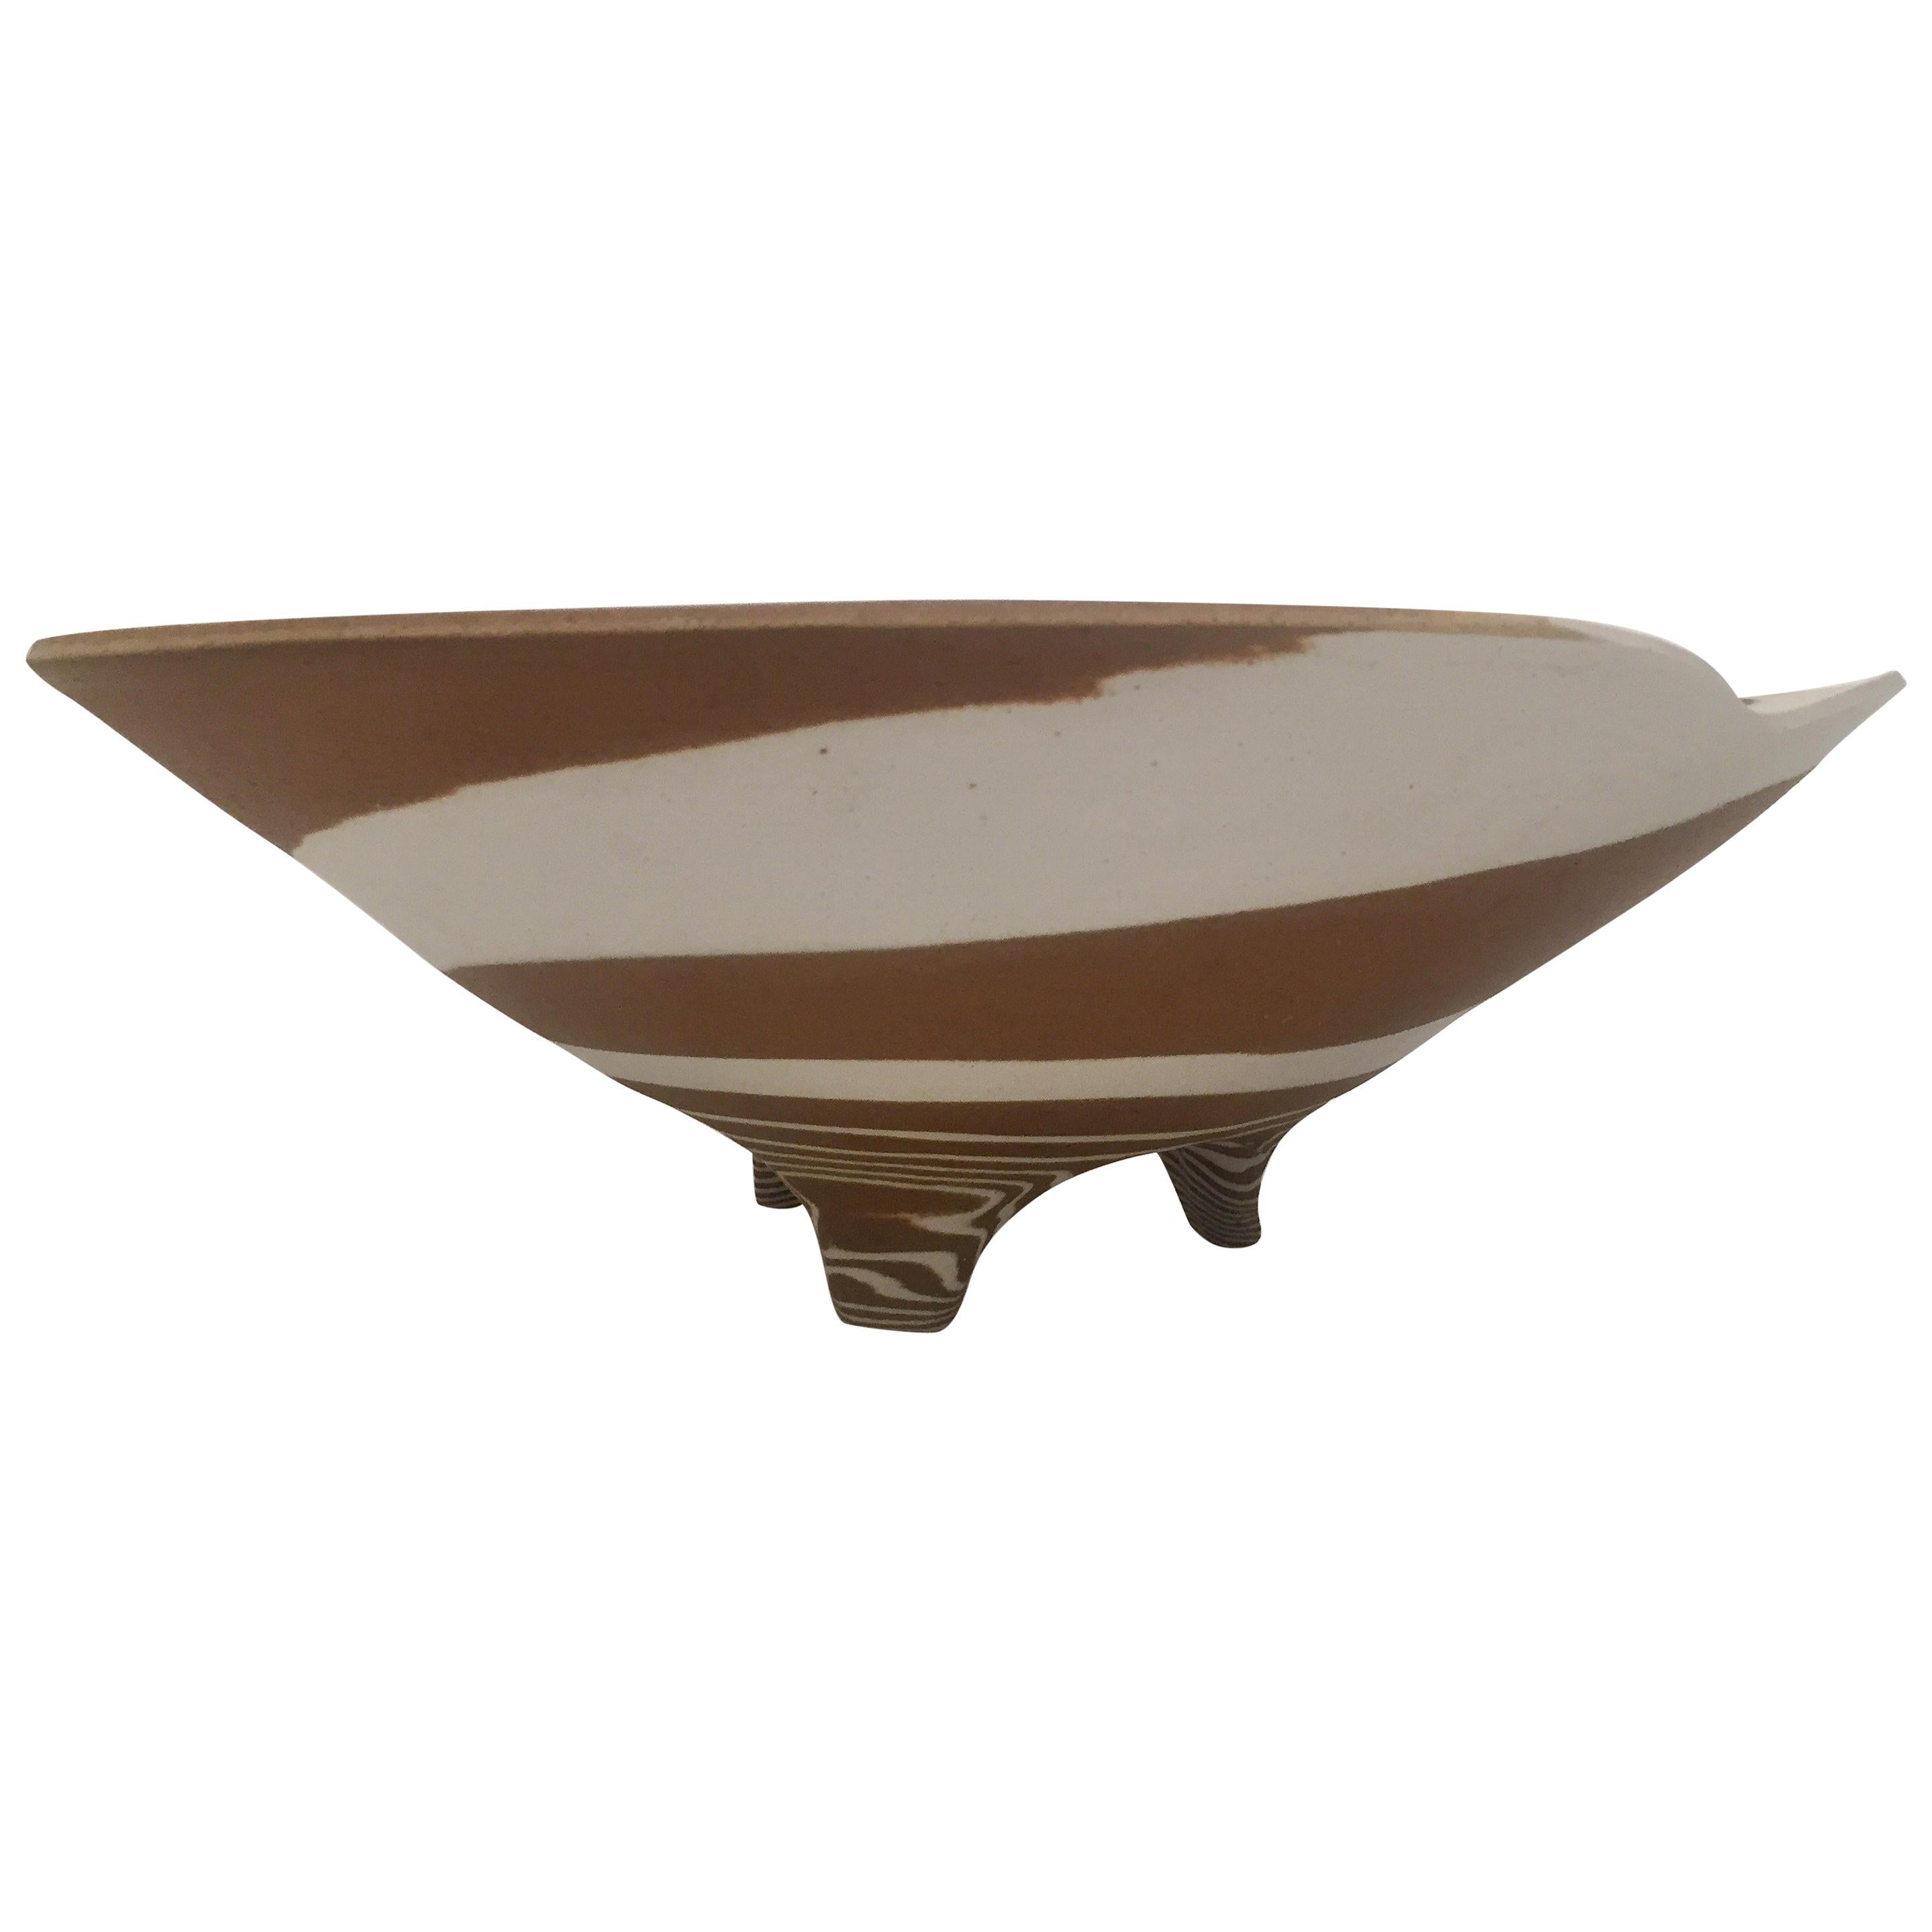 Japanese Ceramic Swirl Bowl For Sale